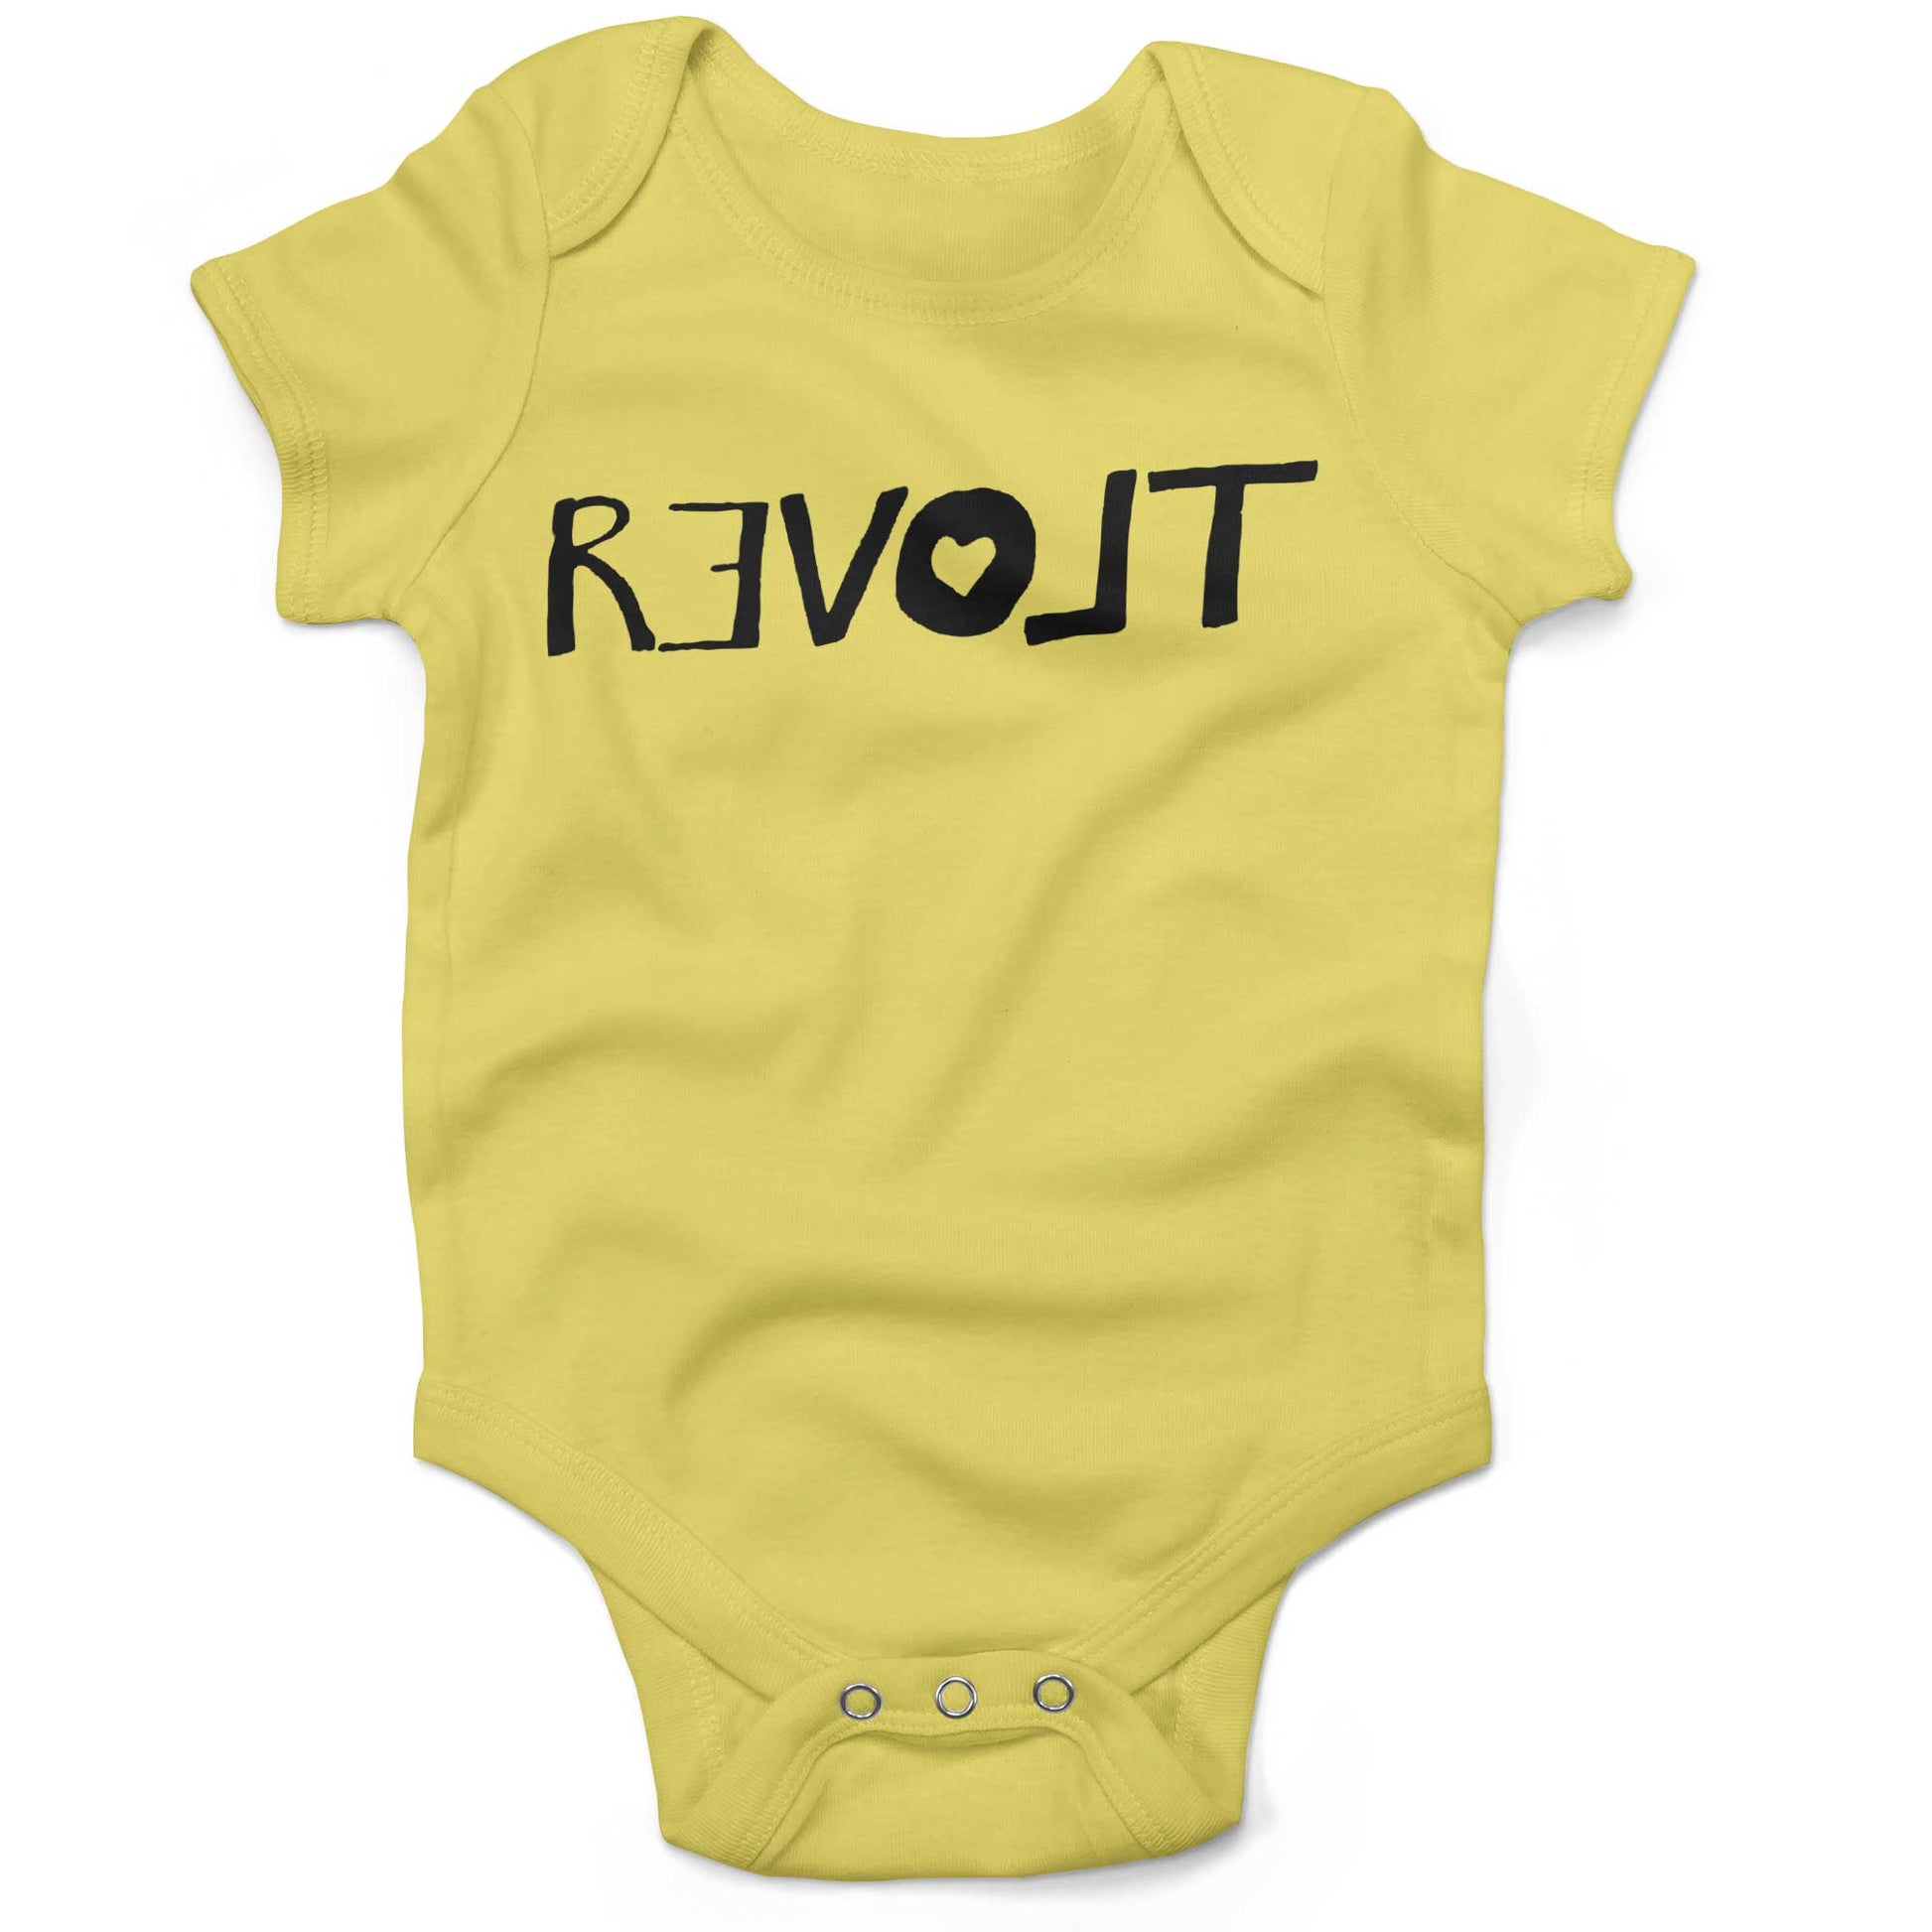 Revolt Infant Bodysuit or Raglan Baby Tee-Yellow-3-6 months